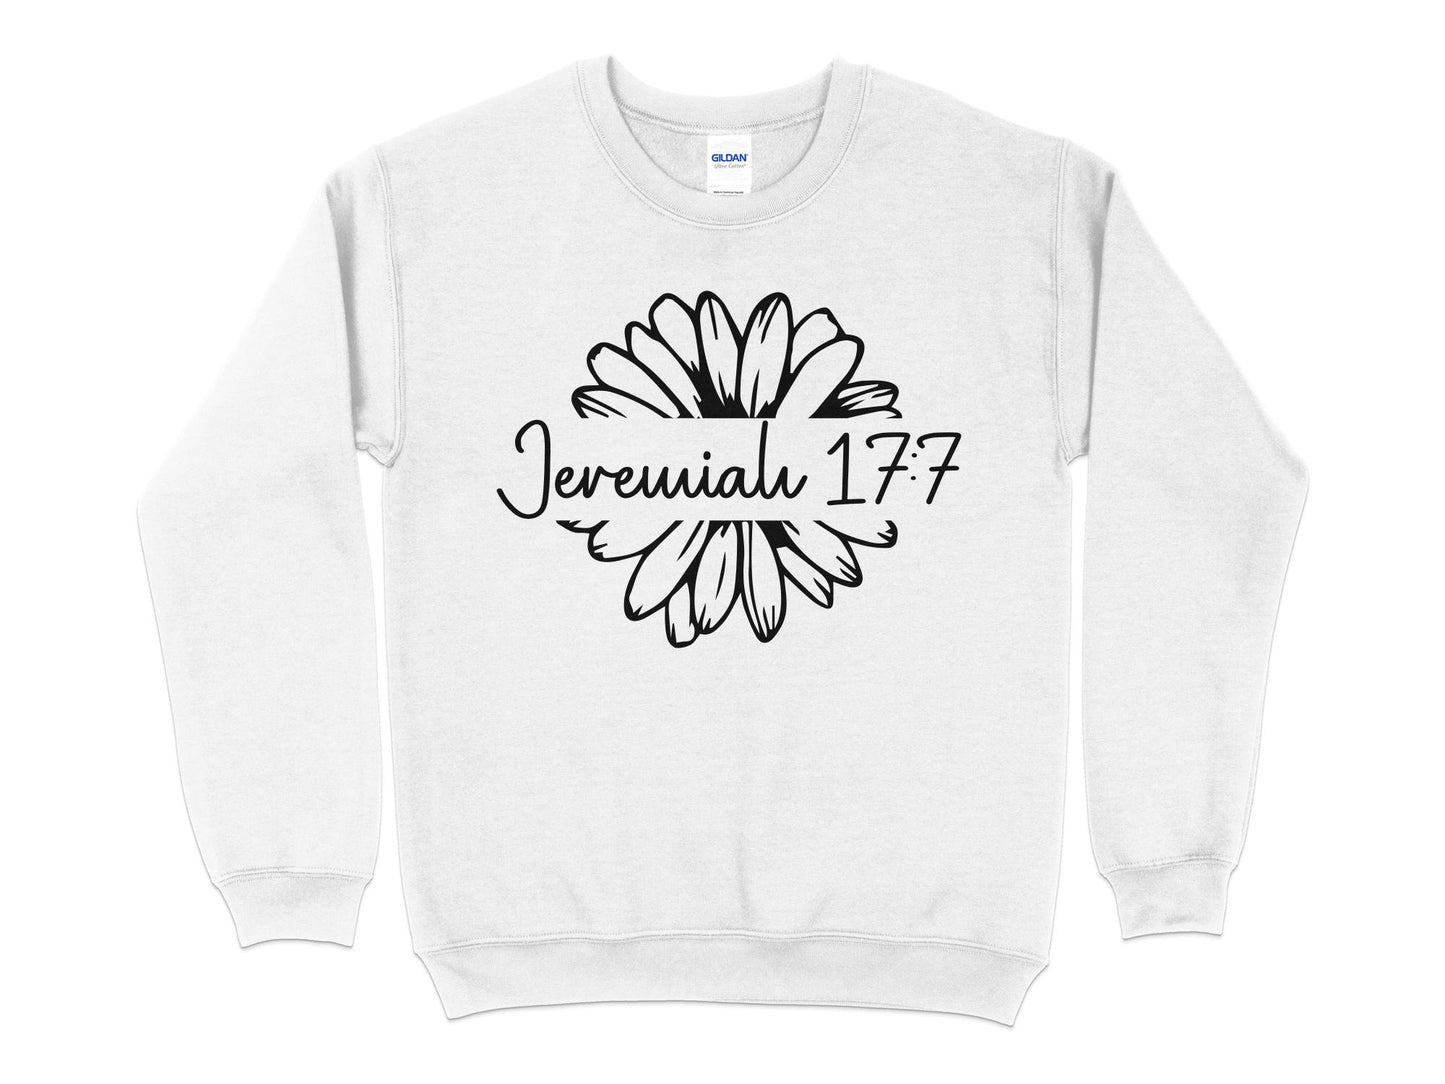 Unisex Jeremiah 17:7 Floral Sweatshirt, Christian Scripture Sweater, Bible Verse Pullover, Casual Spiritual Clothing, Faith-Based Top - Mardonyx Sweatshirt S / White